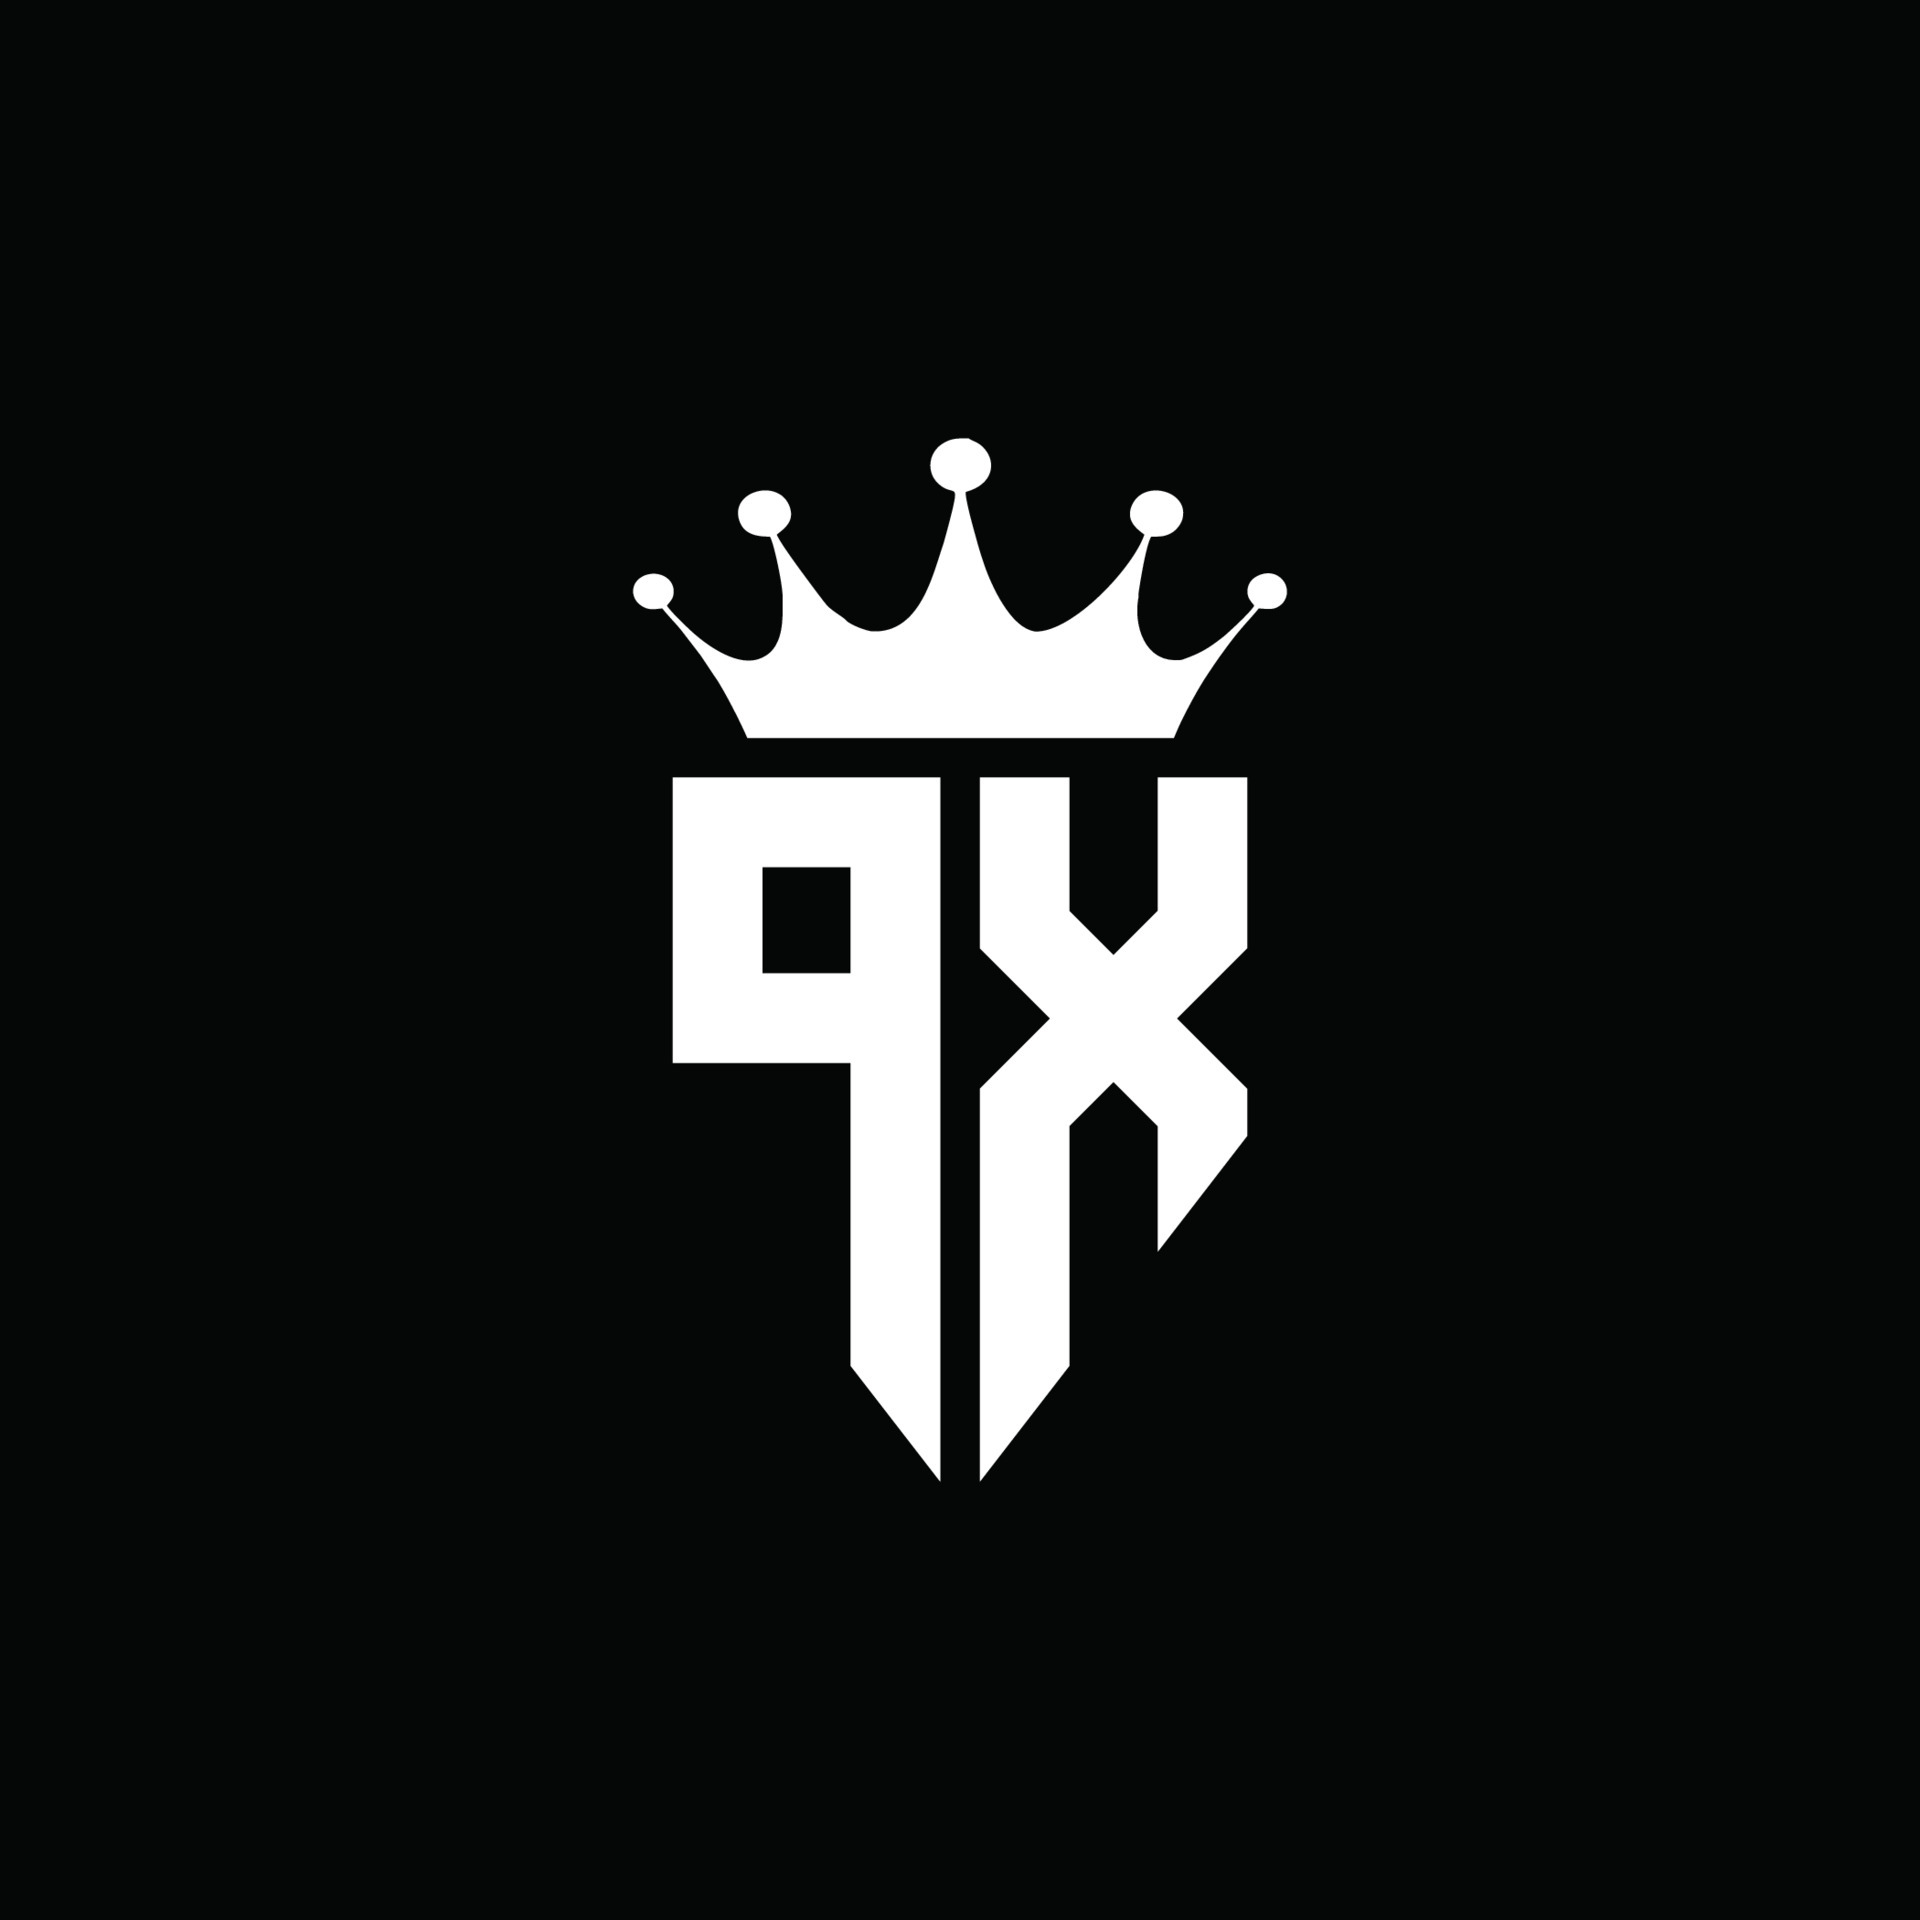 PX logo monogram emblem style with crown shape design template